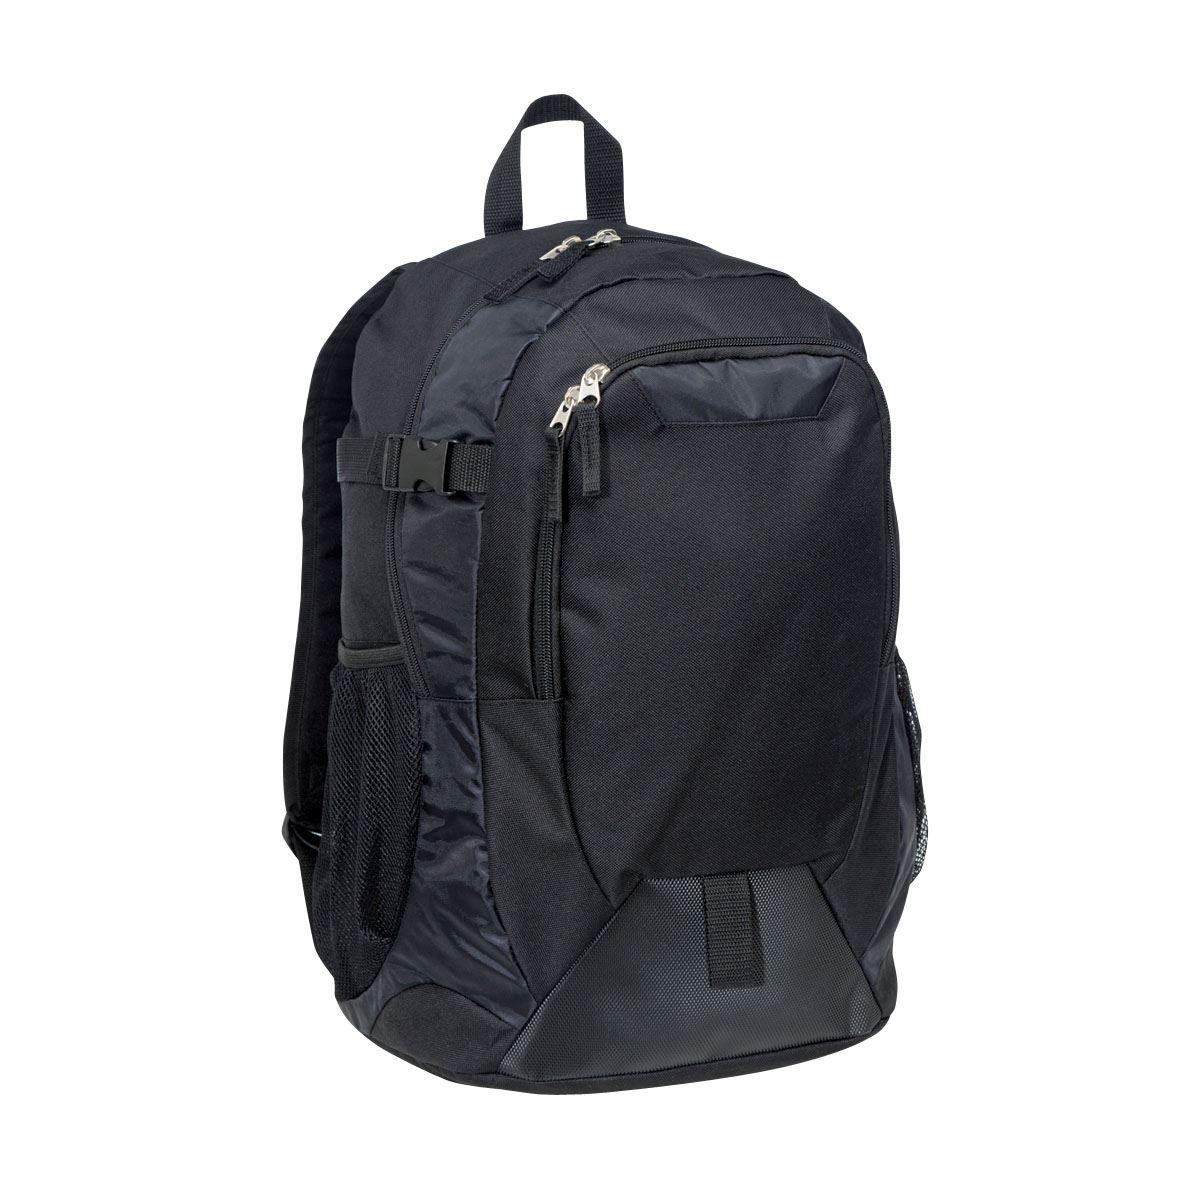 Boost Laptop Backpack | laptop bags australia | cheap laptop bags ...